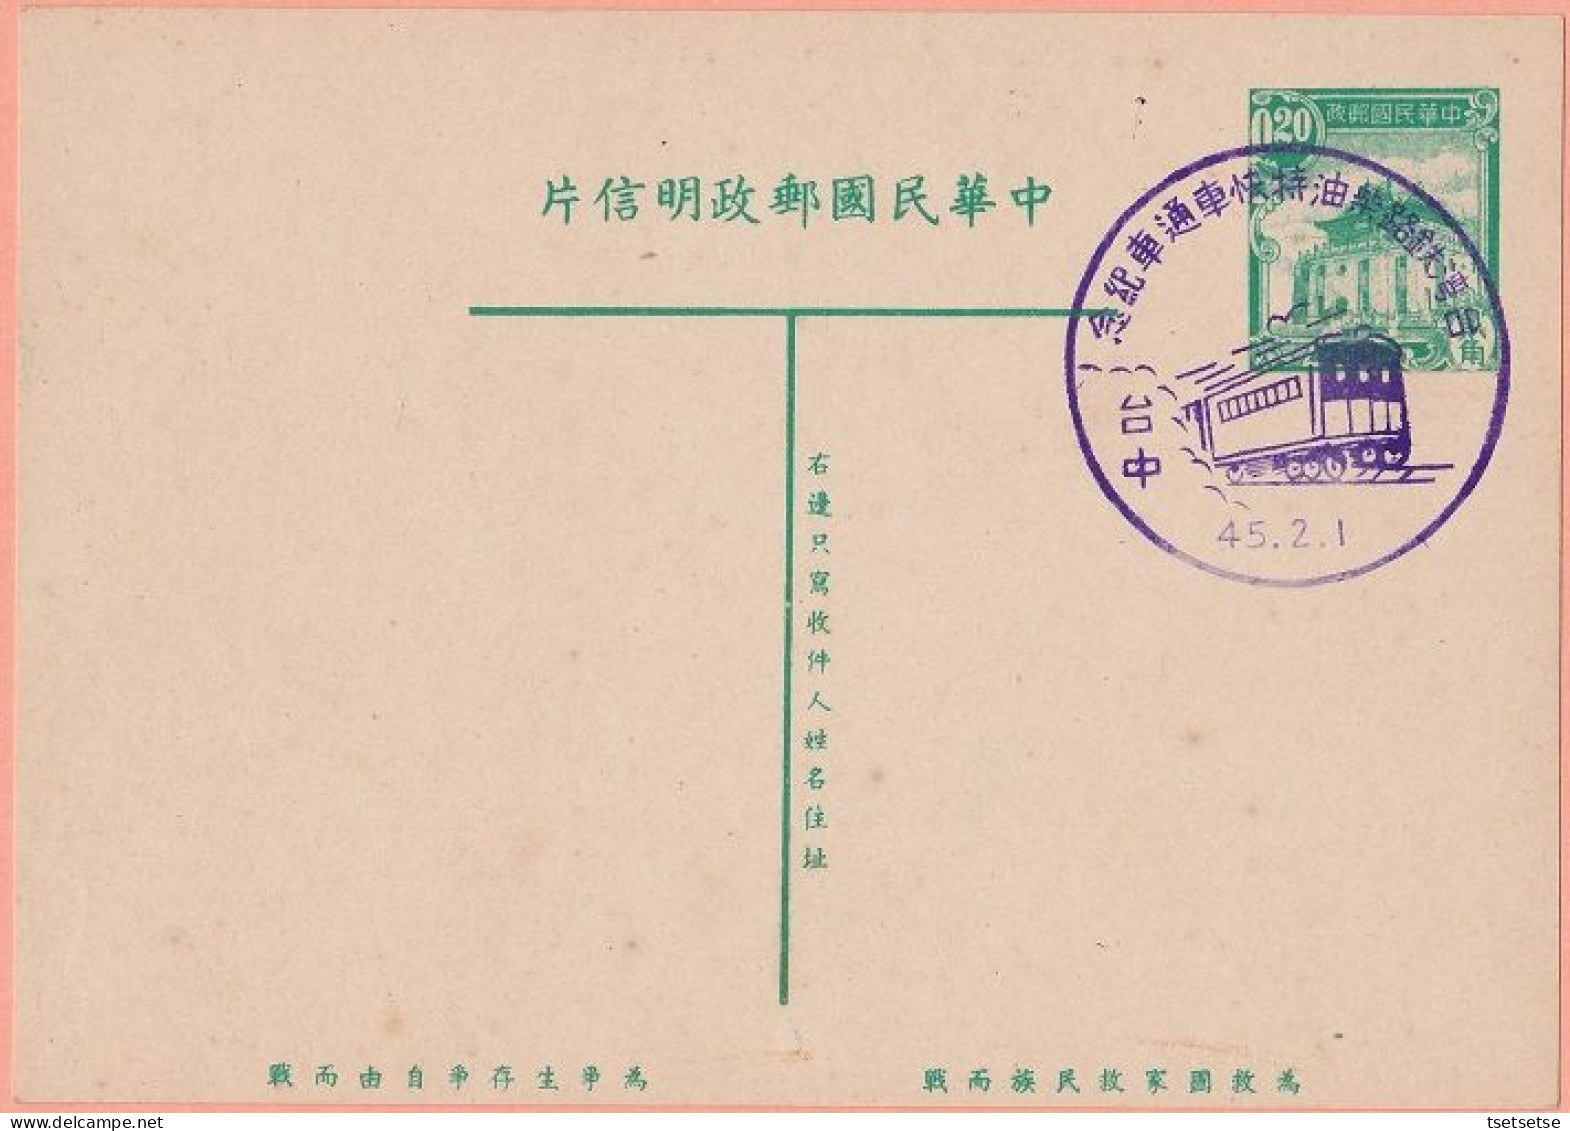 1956 RO China Taiwan Train Express postcard